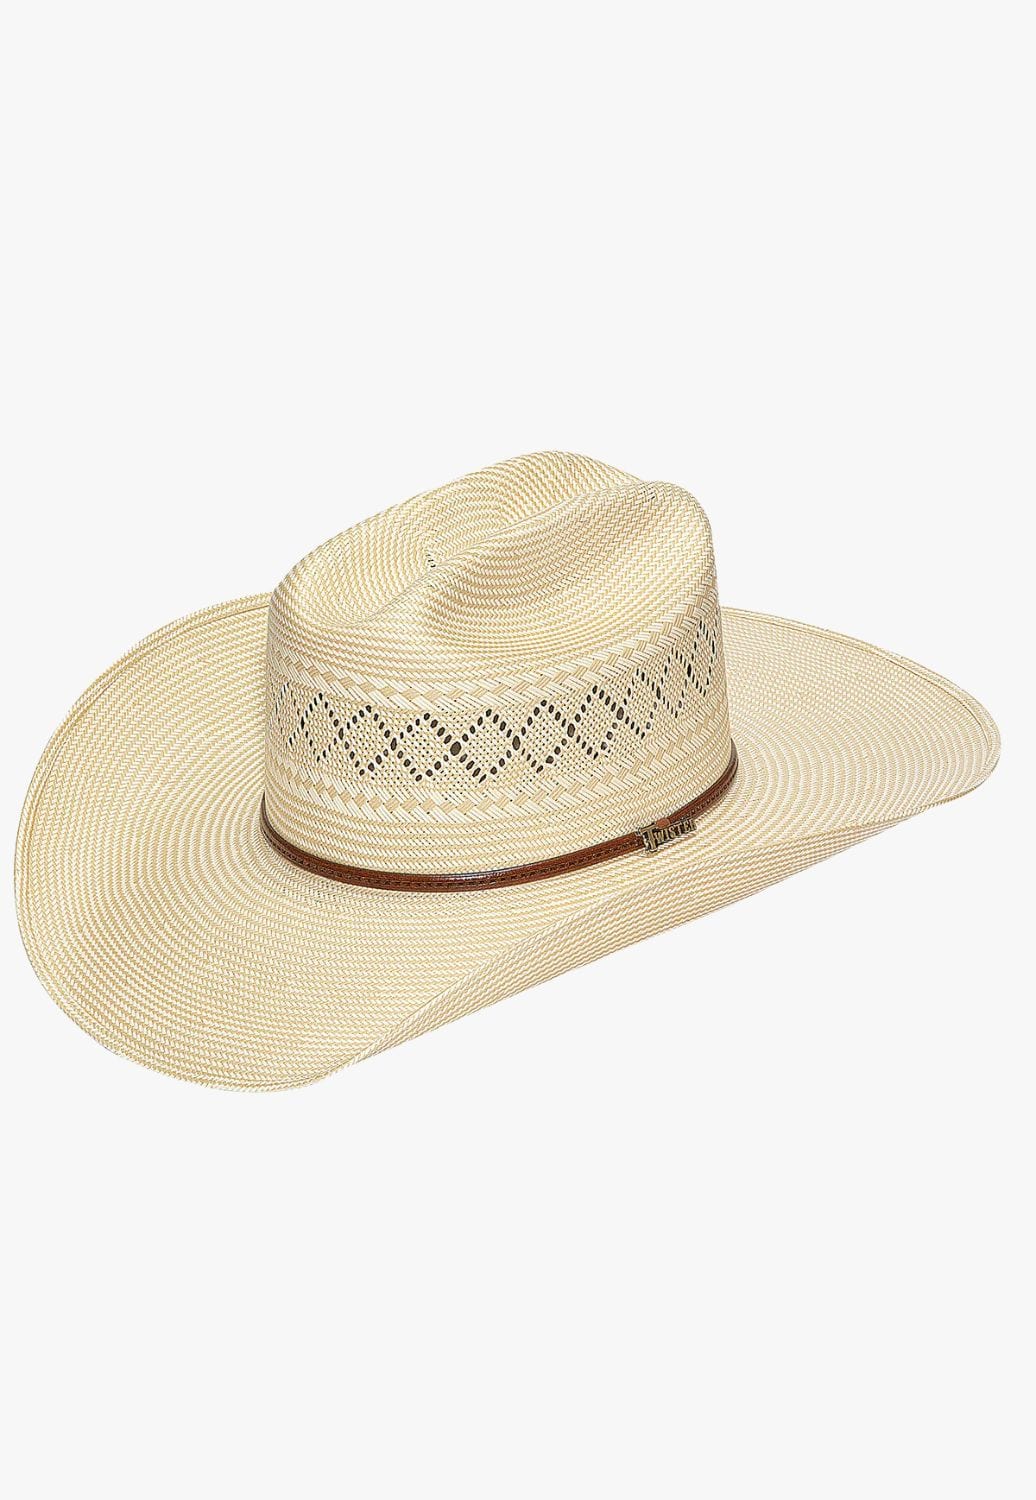 Twister HATS - Straw Twister 10X Shantung Straw Hat